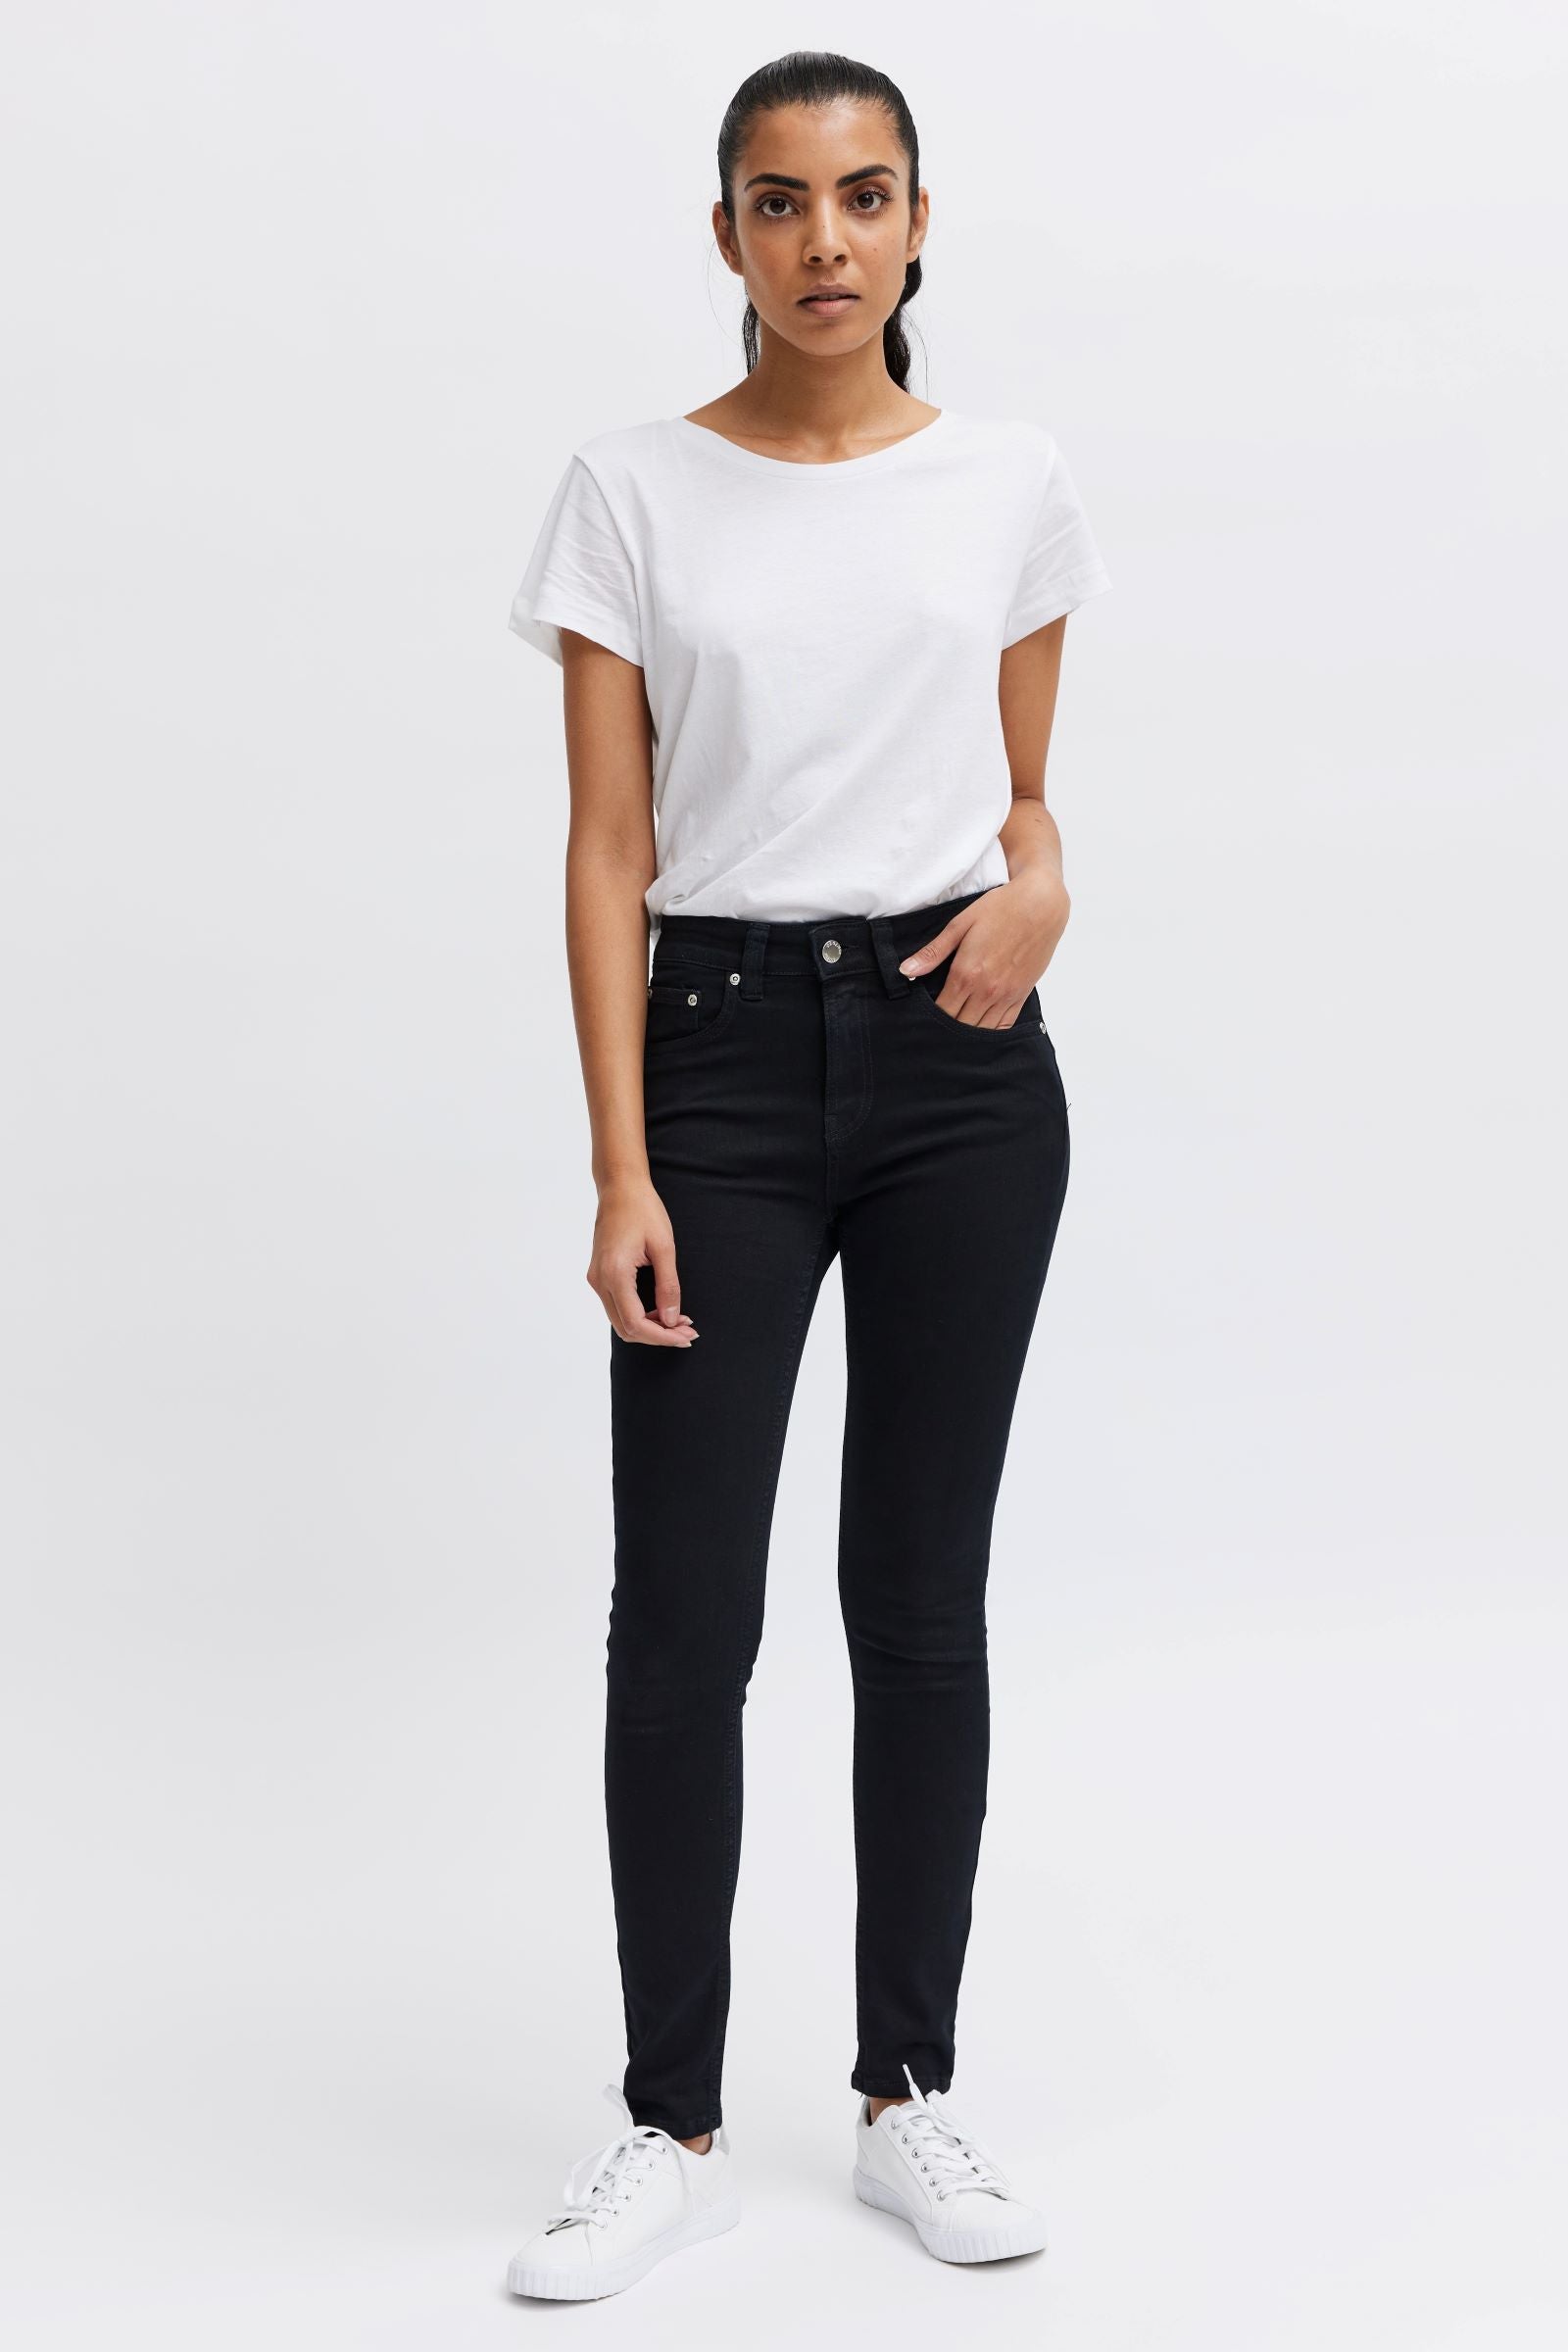 Organic cotton, black skinny jeans for women - Women's perfect pants